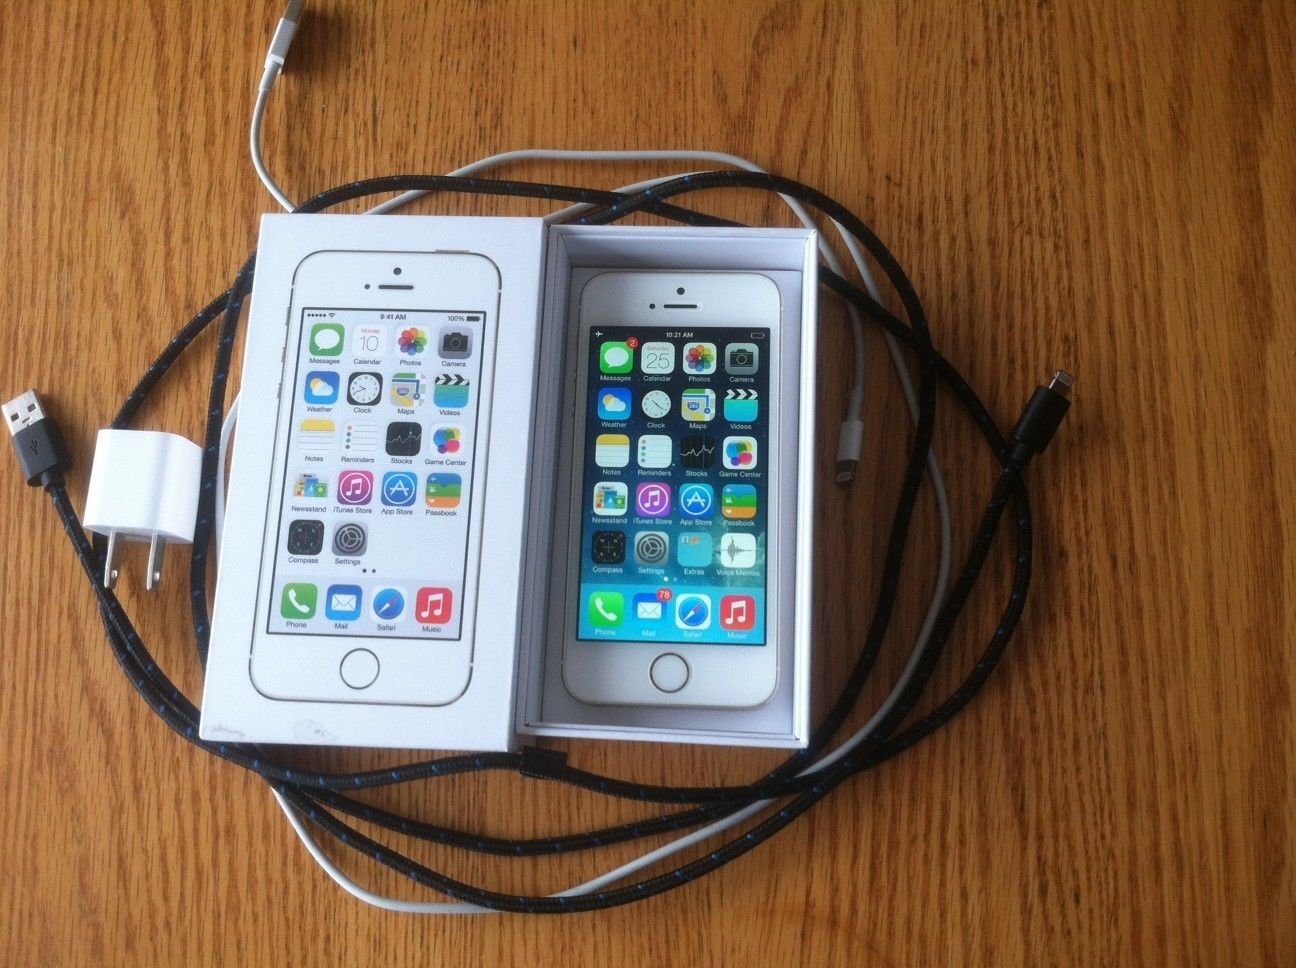 New Apple iPhone 5s (Latest Model) 64GB - Silver (Unlocked) Smartphone